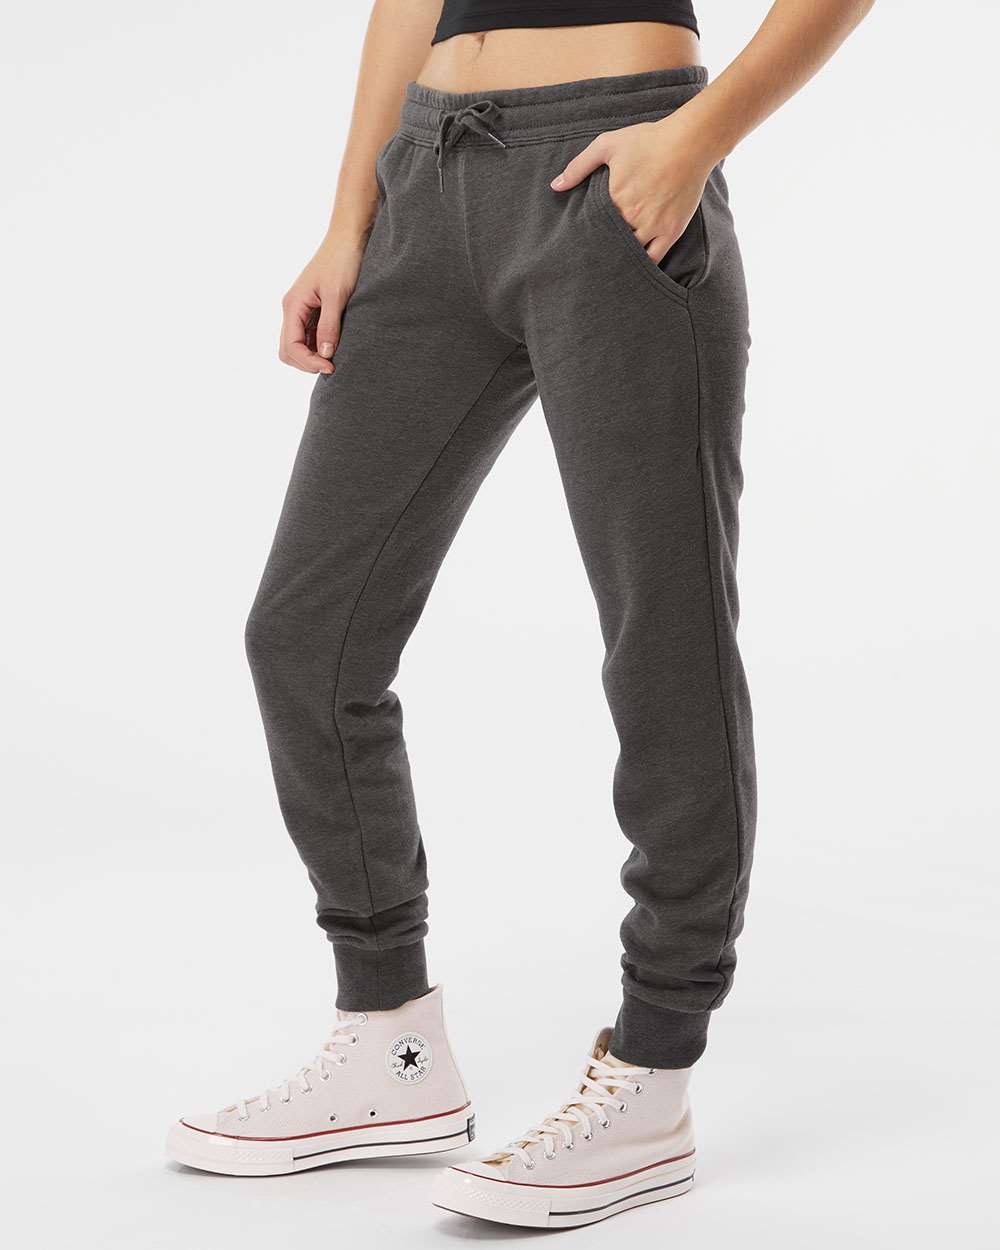 Shift Drawcord Pocket Cuffed Pants  Women's Sports Pants – Yvette_UK